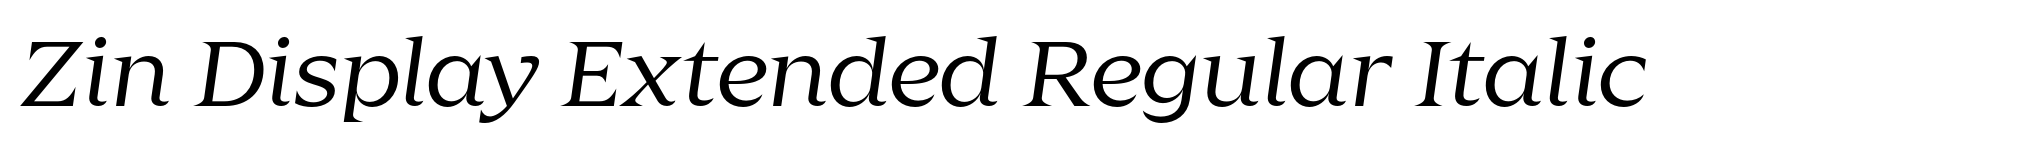 Zin Display Extended Regular Italic image